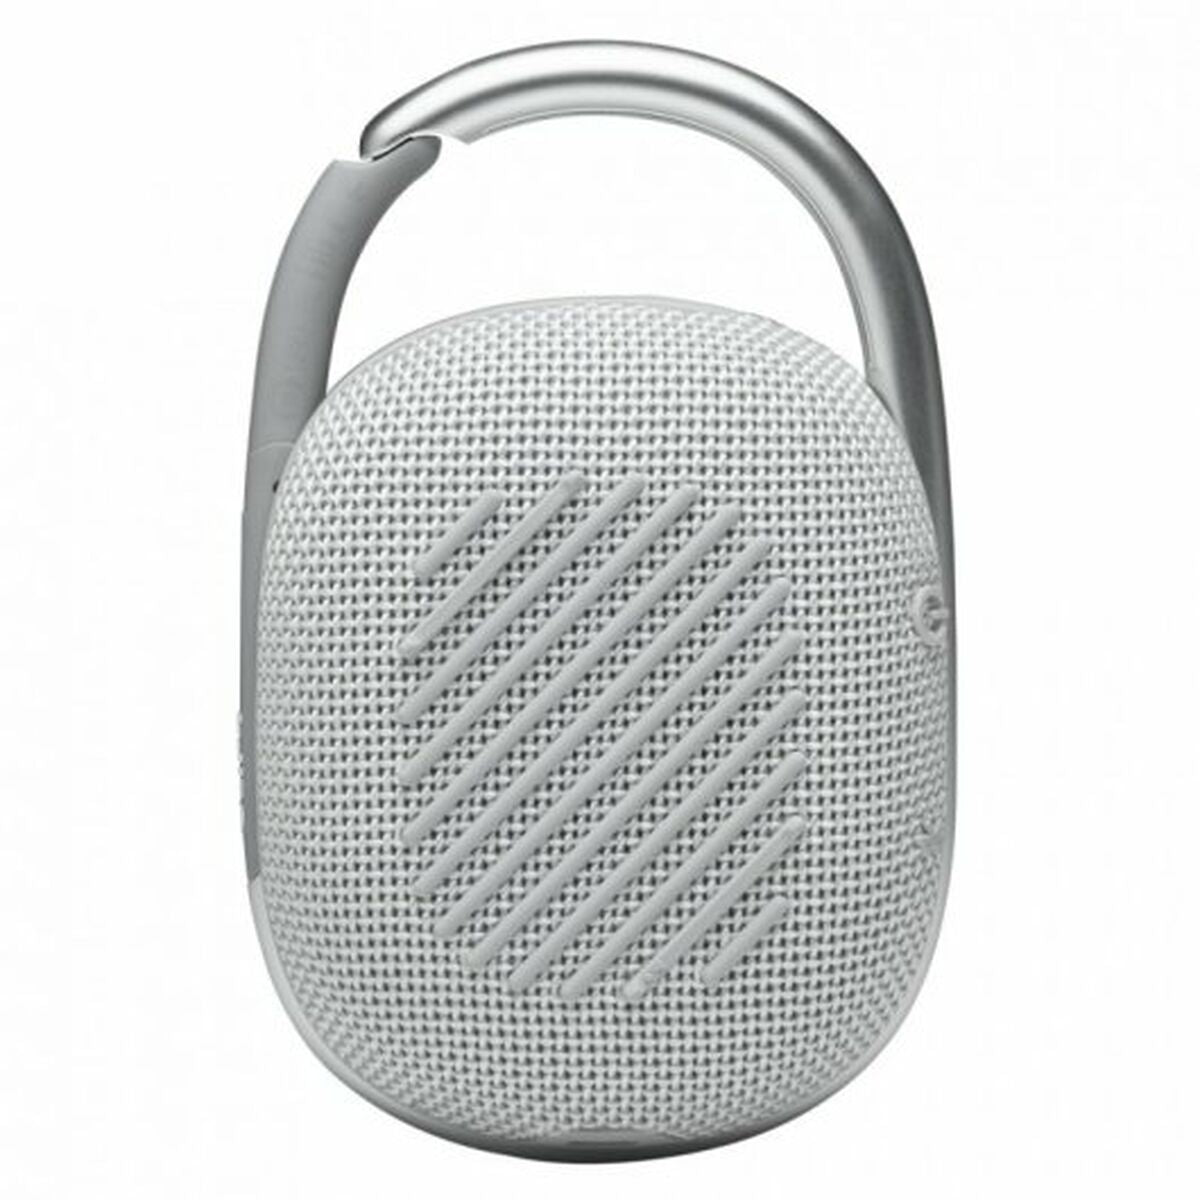 Kaufe Tragbare Bluetooth-Lautsprecher JBL Clip 4 Weiß 5 W bei AWK Flagship um € 96.00